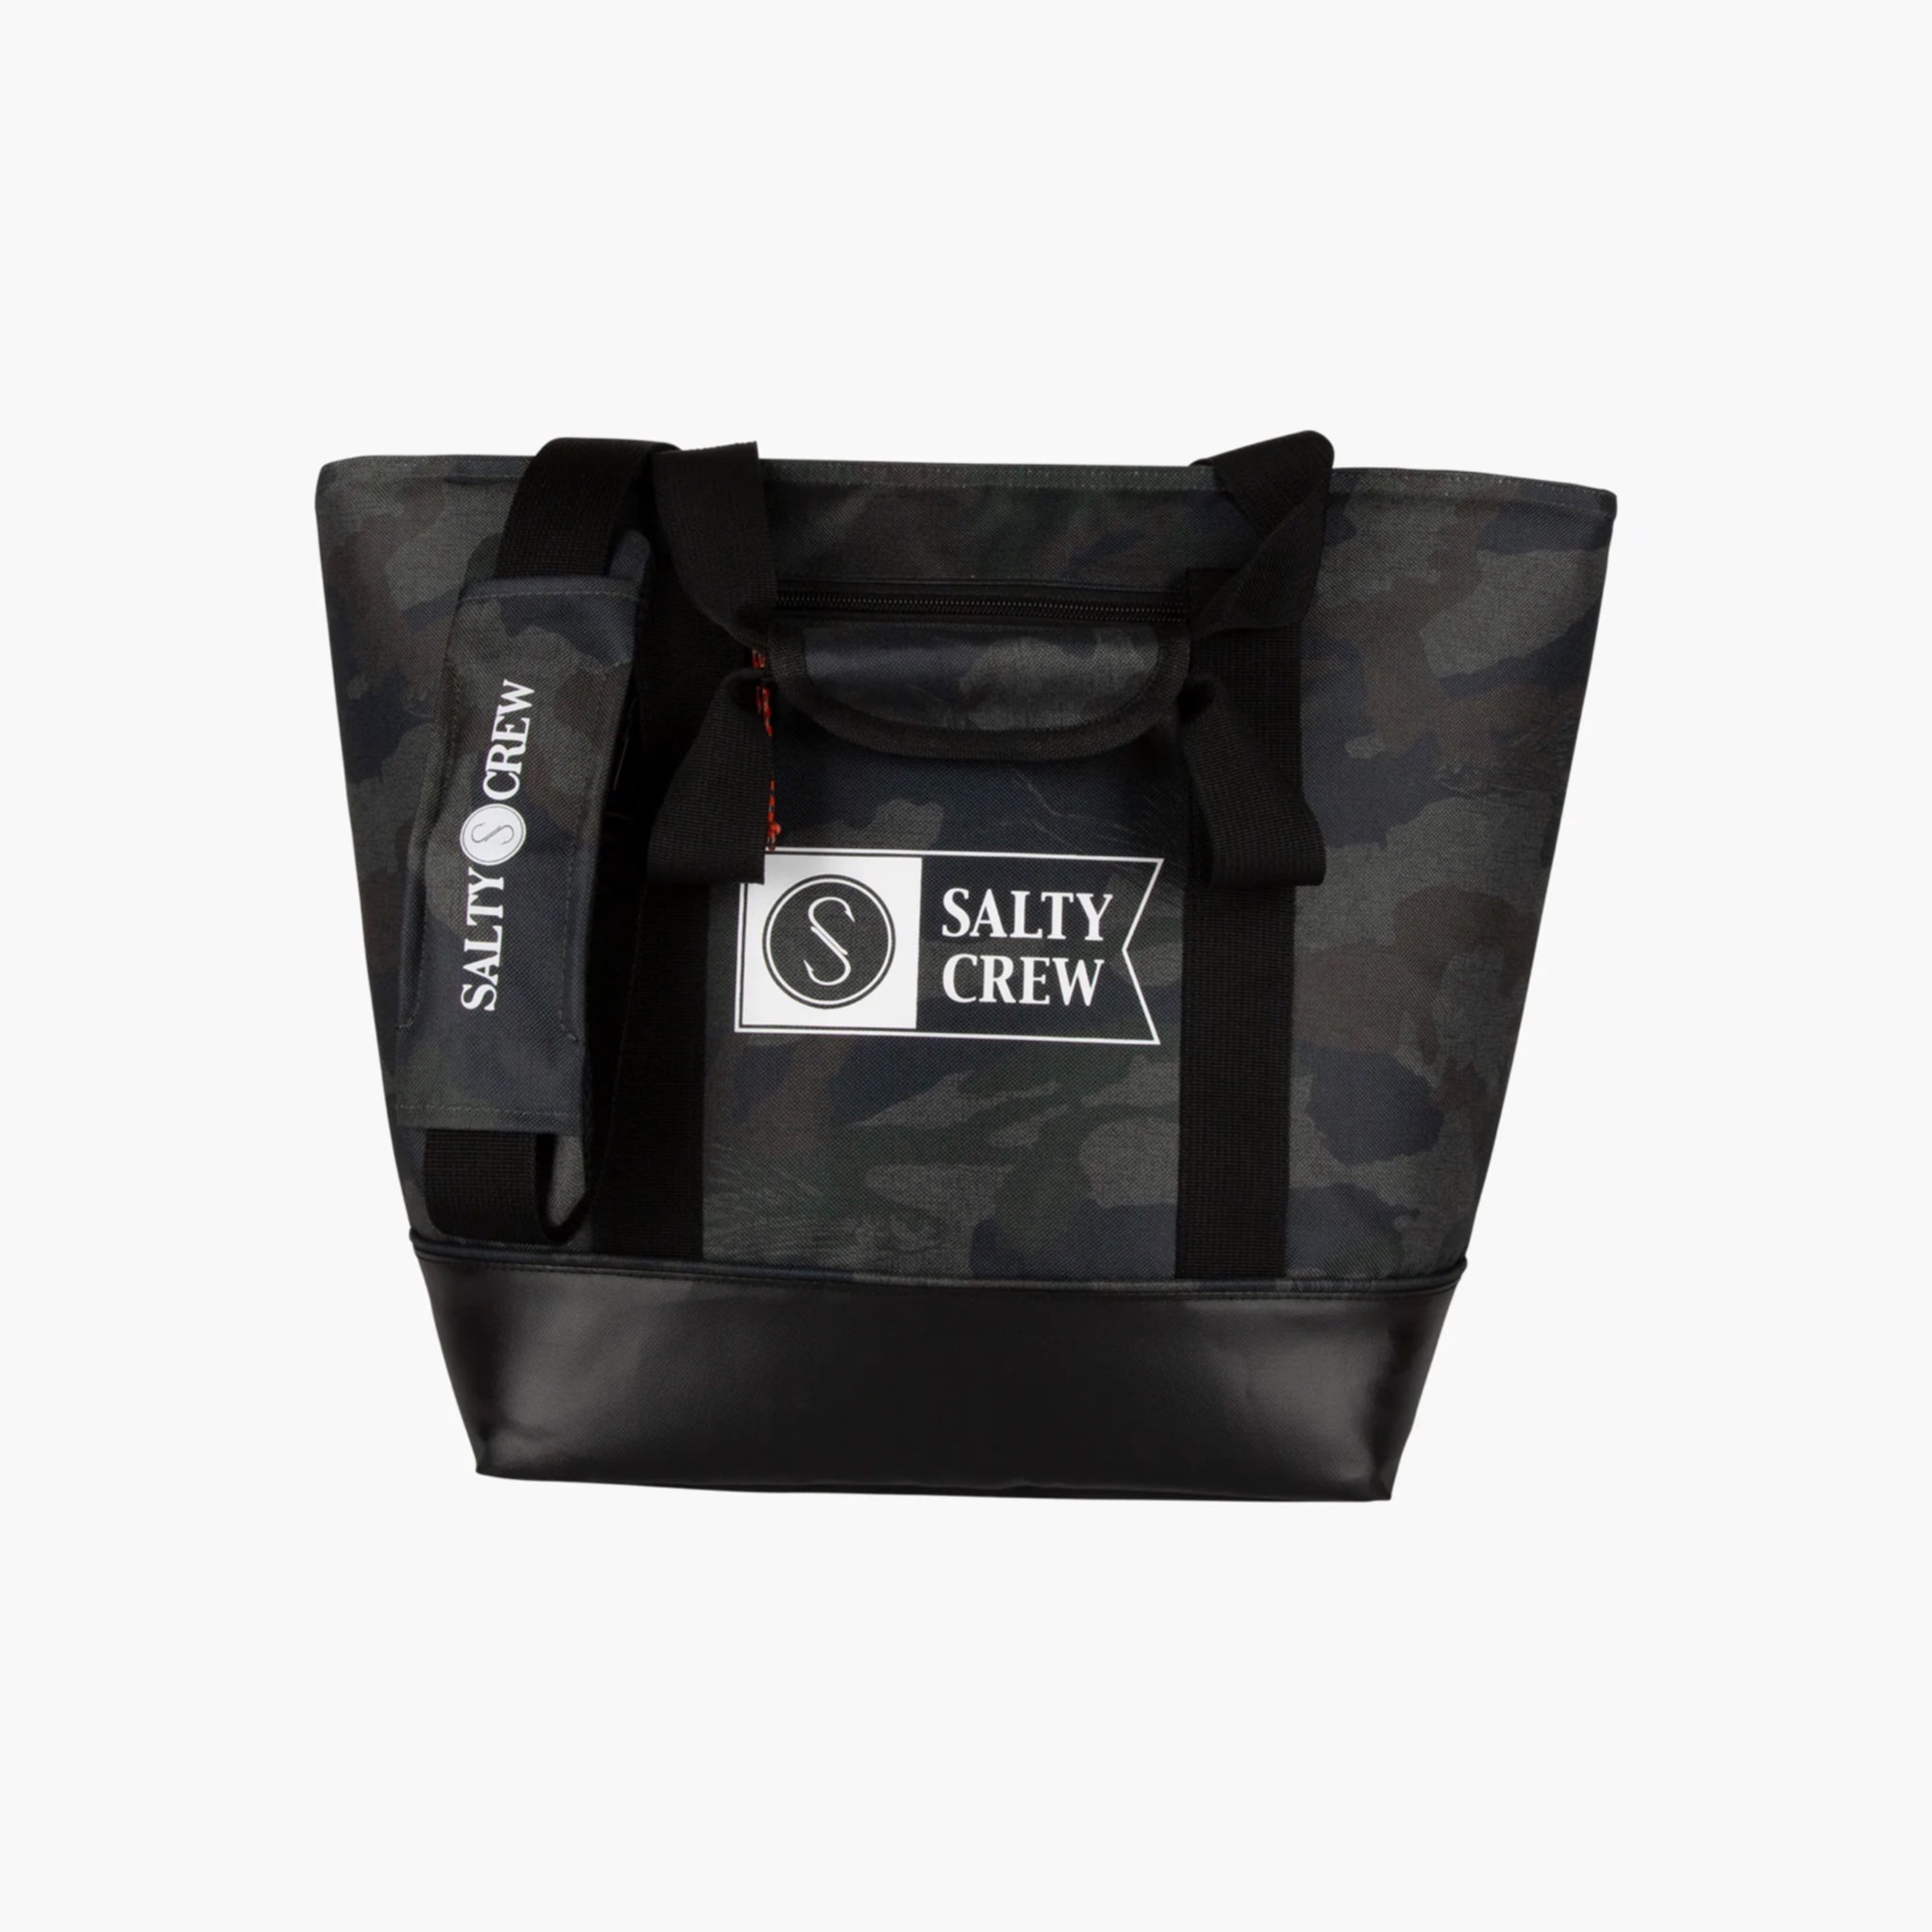 Salty Crew Day Tripper Cooler Bag - Camo